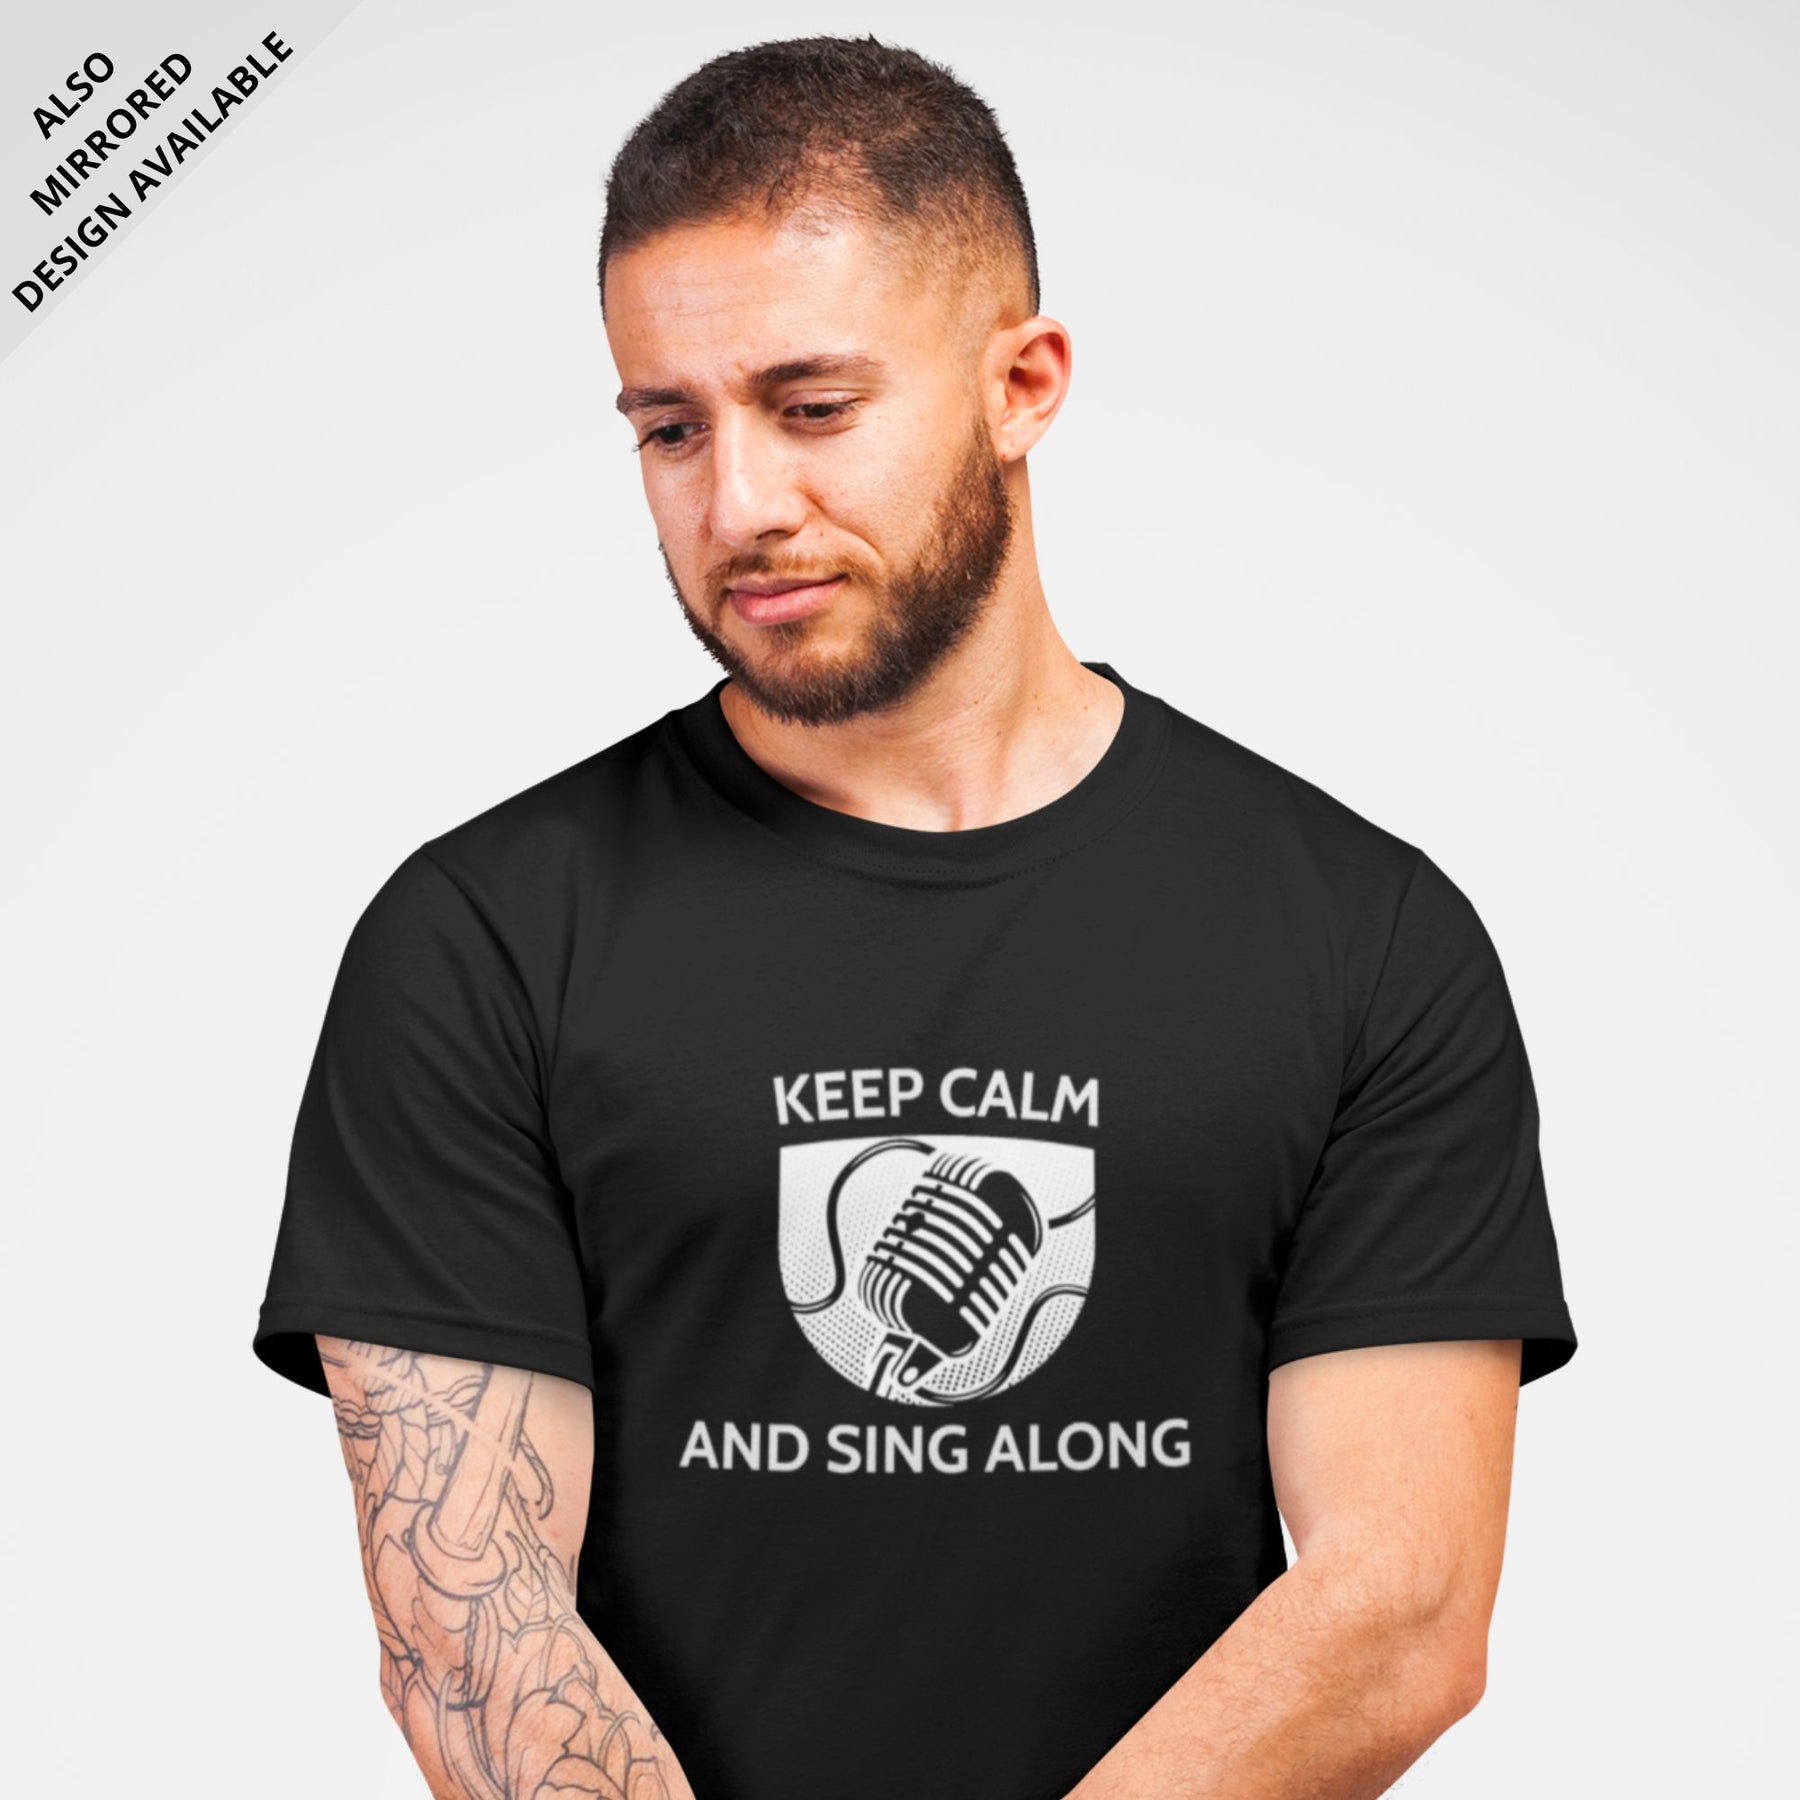 keep-calm-and-sing-along-black-printed-round-neck-t-shirt-gogirgit-com